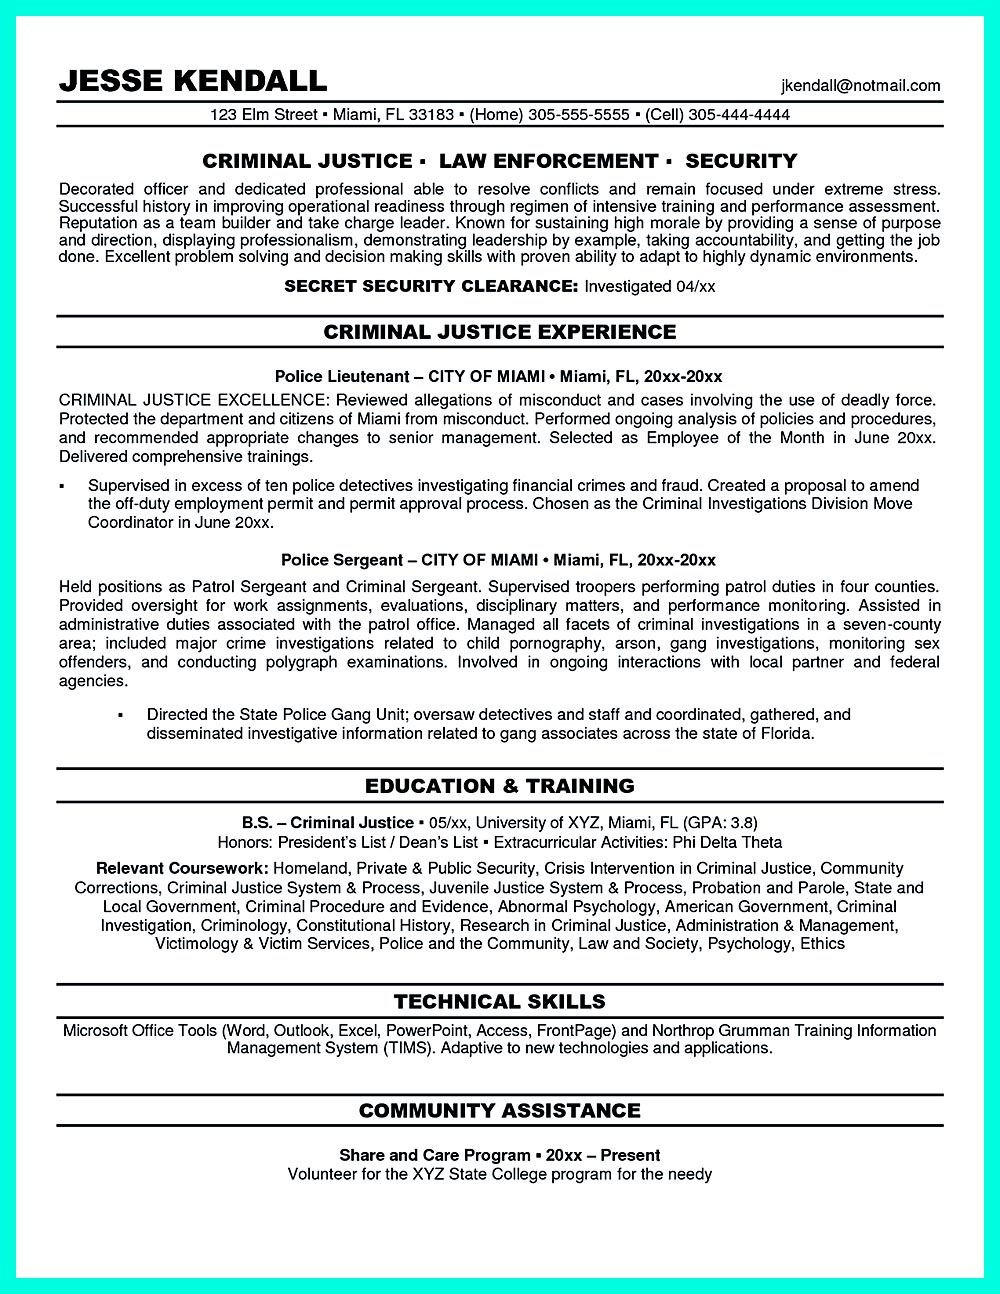 Resume Sample for Criminal Justice Graduates Best Criminal Justice Resume Collection From Professionals …